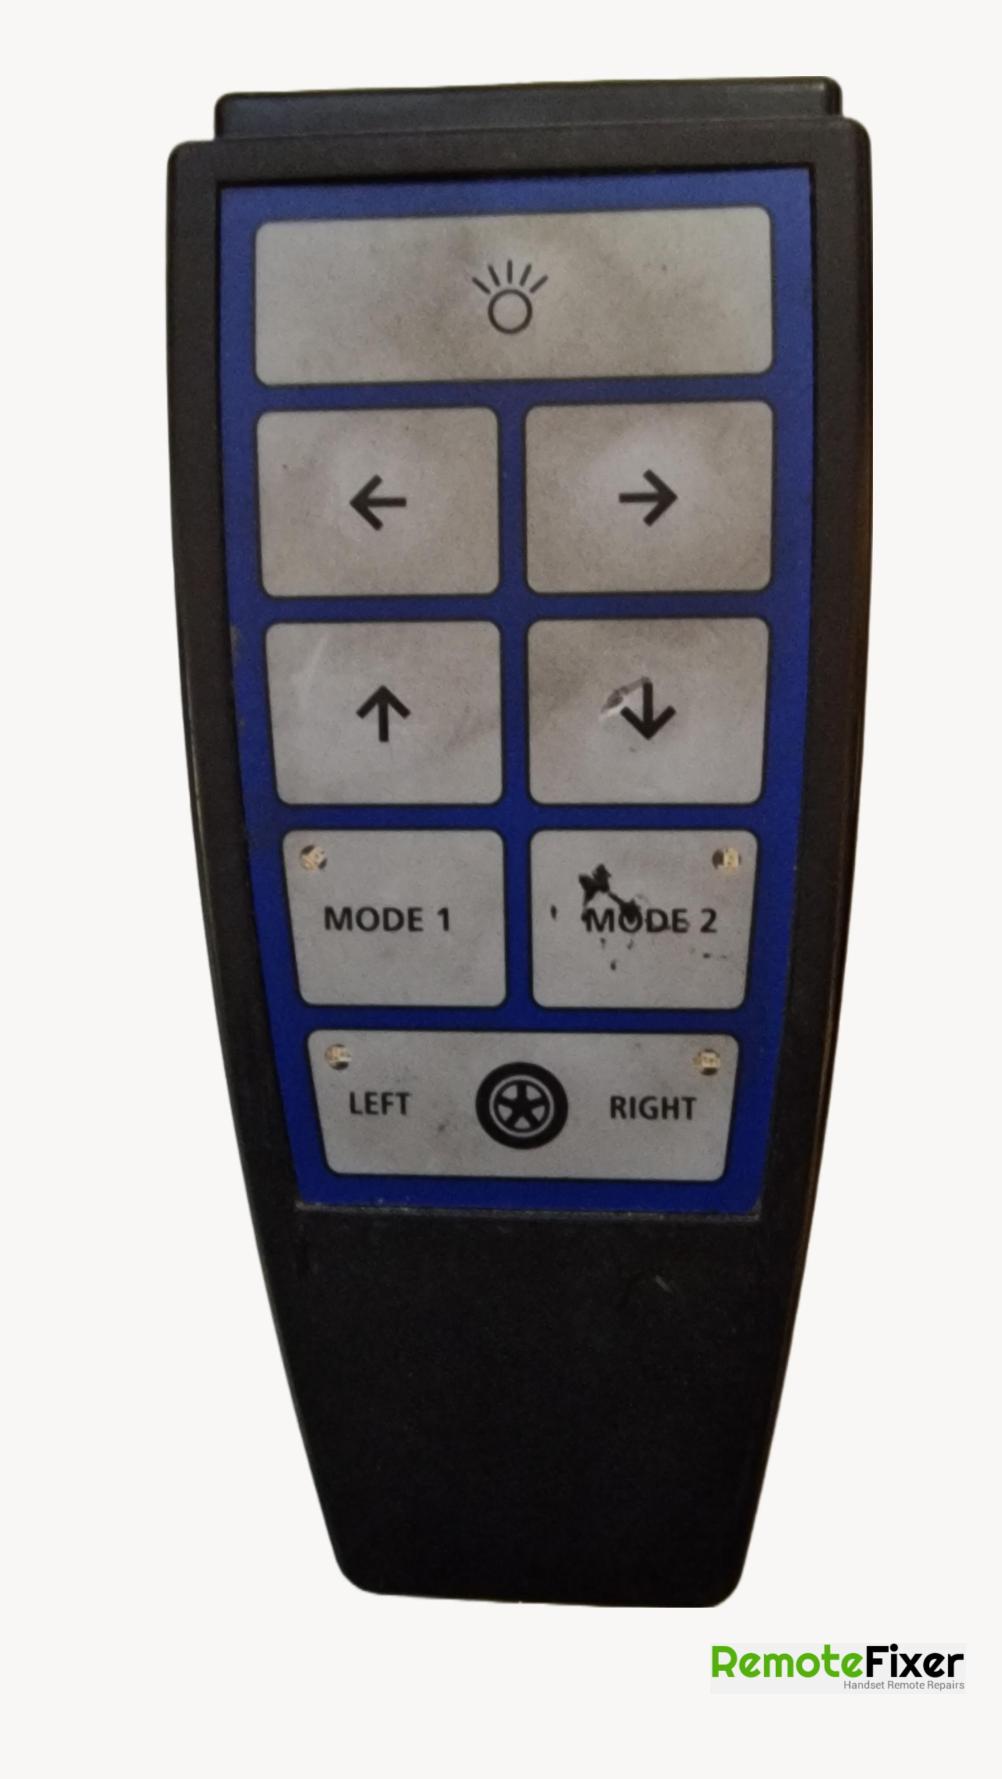 nussbaum rcp155  Remote Control - Front Image